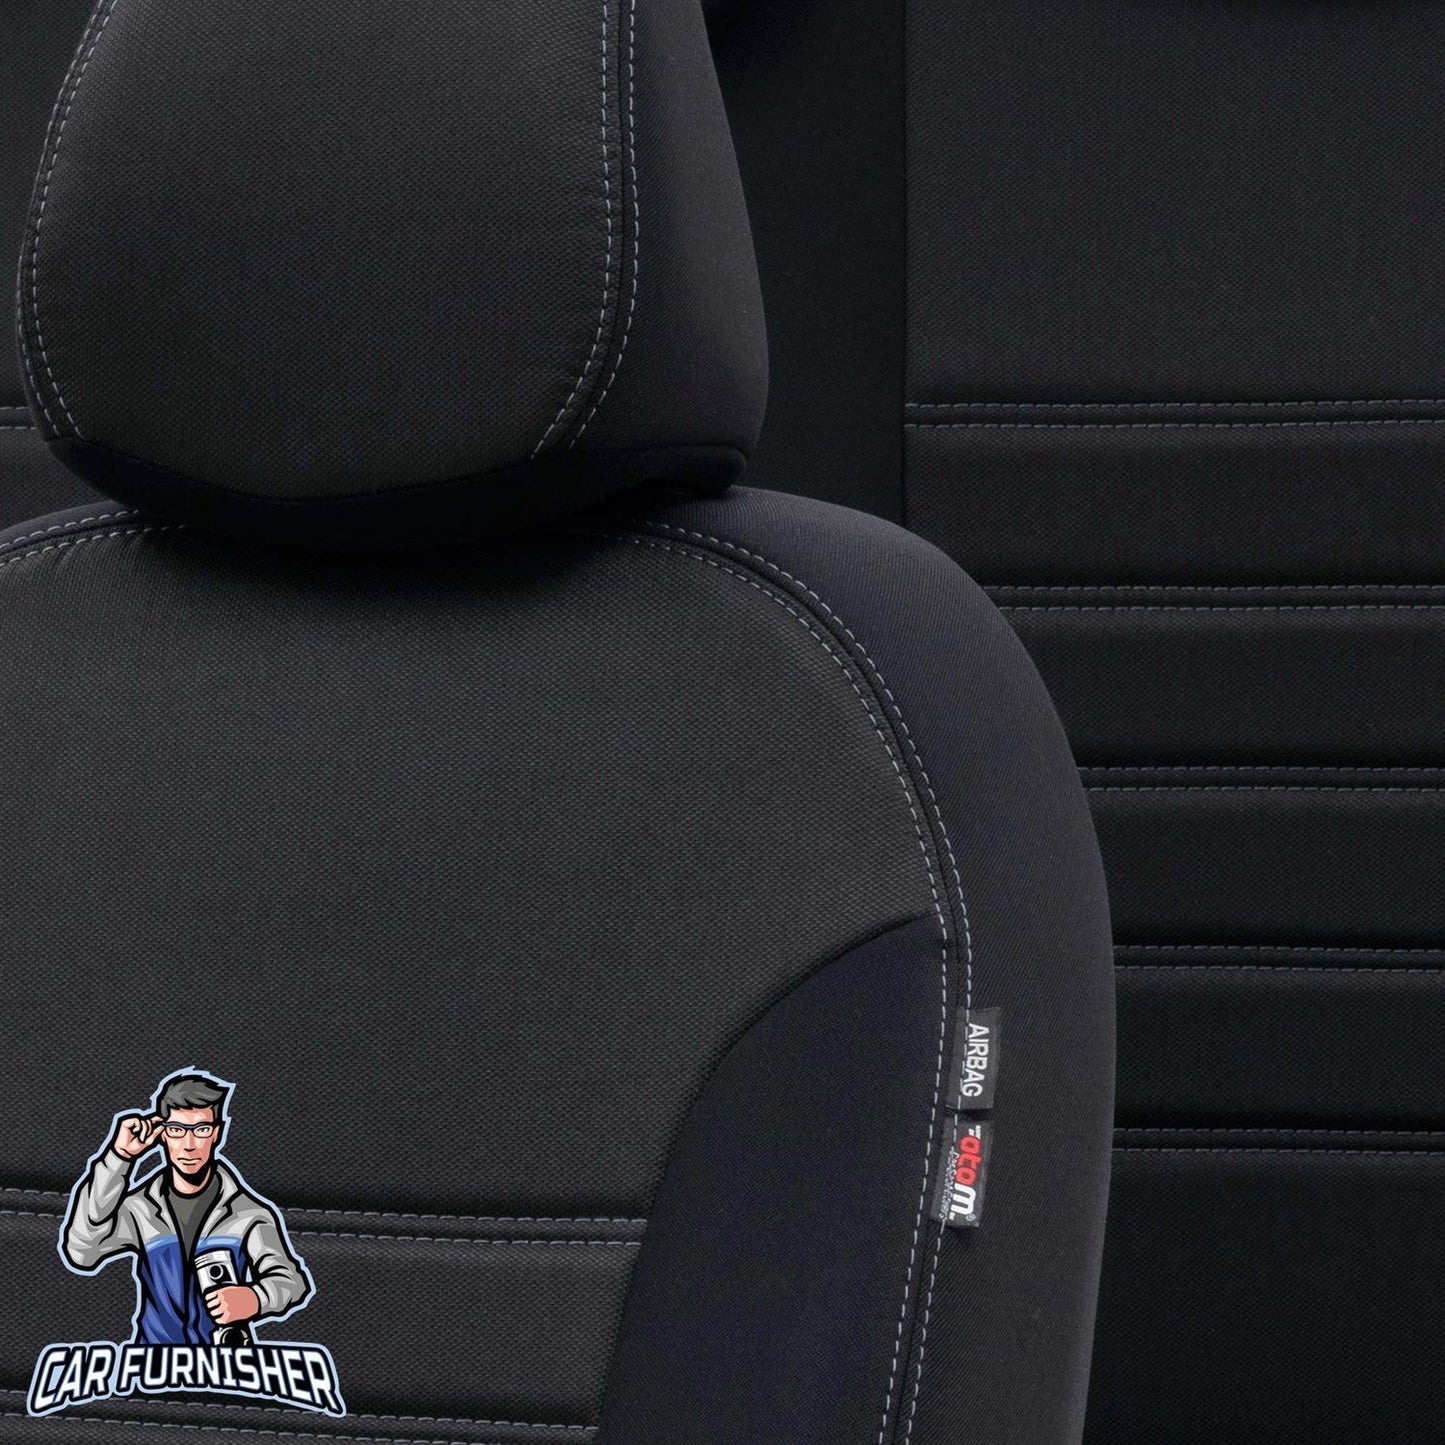 Chevrolet Captiva Seat Cover Original Jacquard Design Black Jacquard Fabric